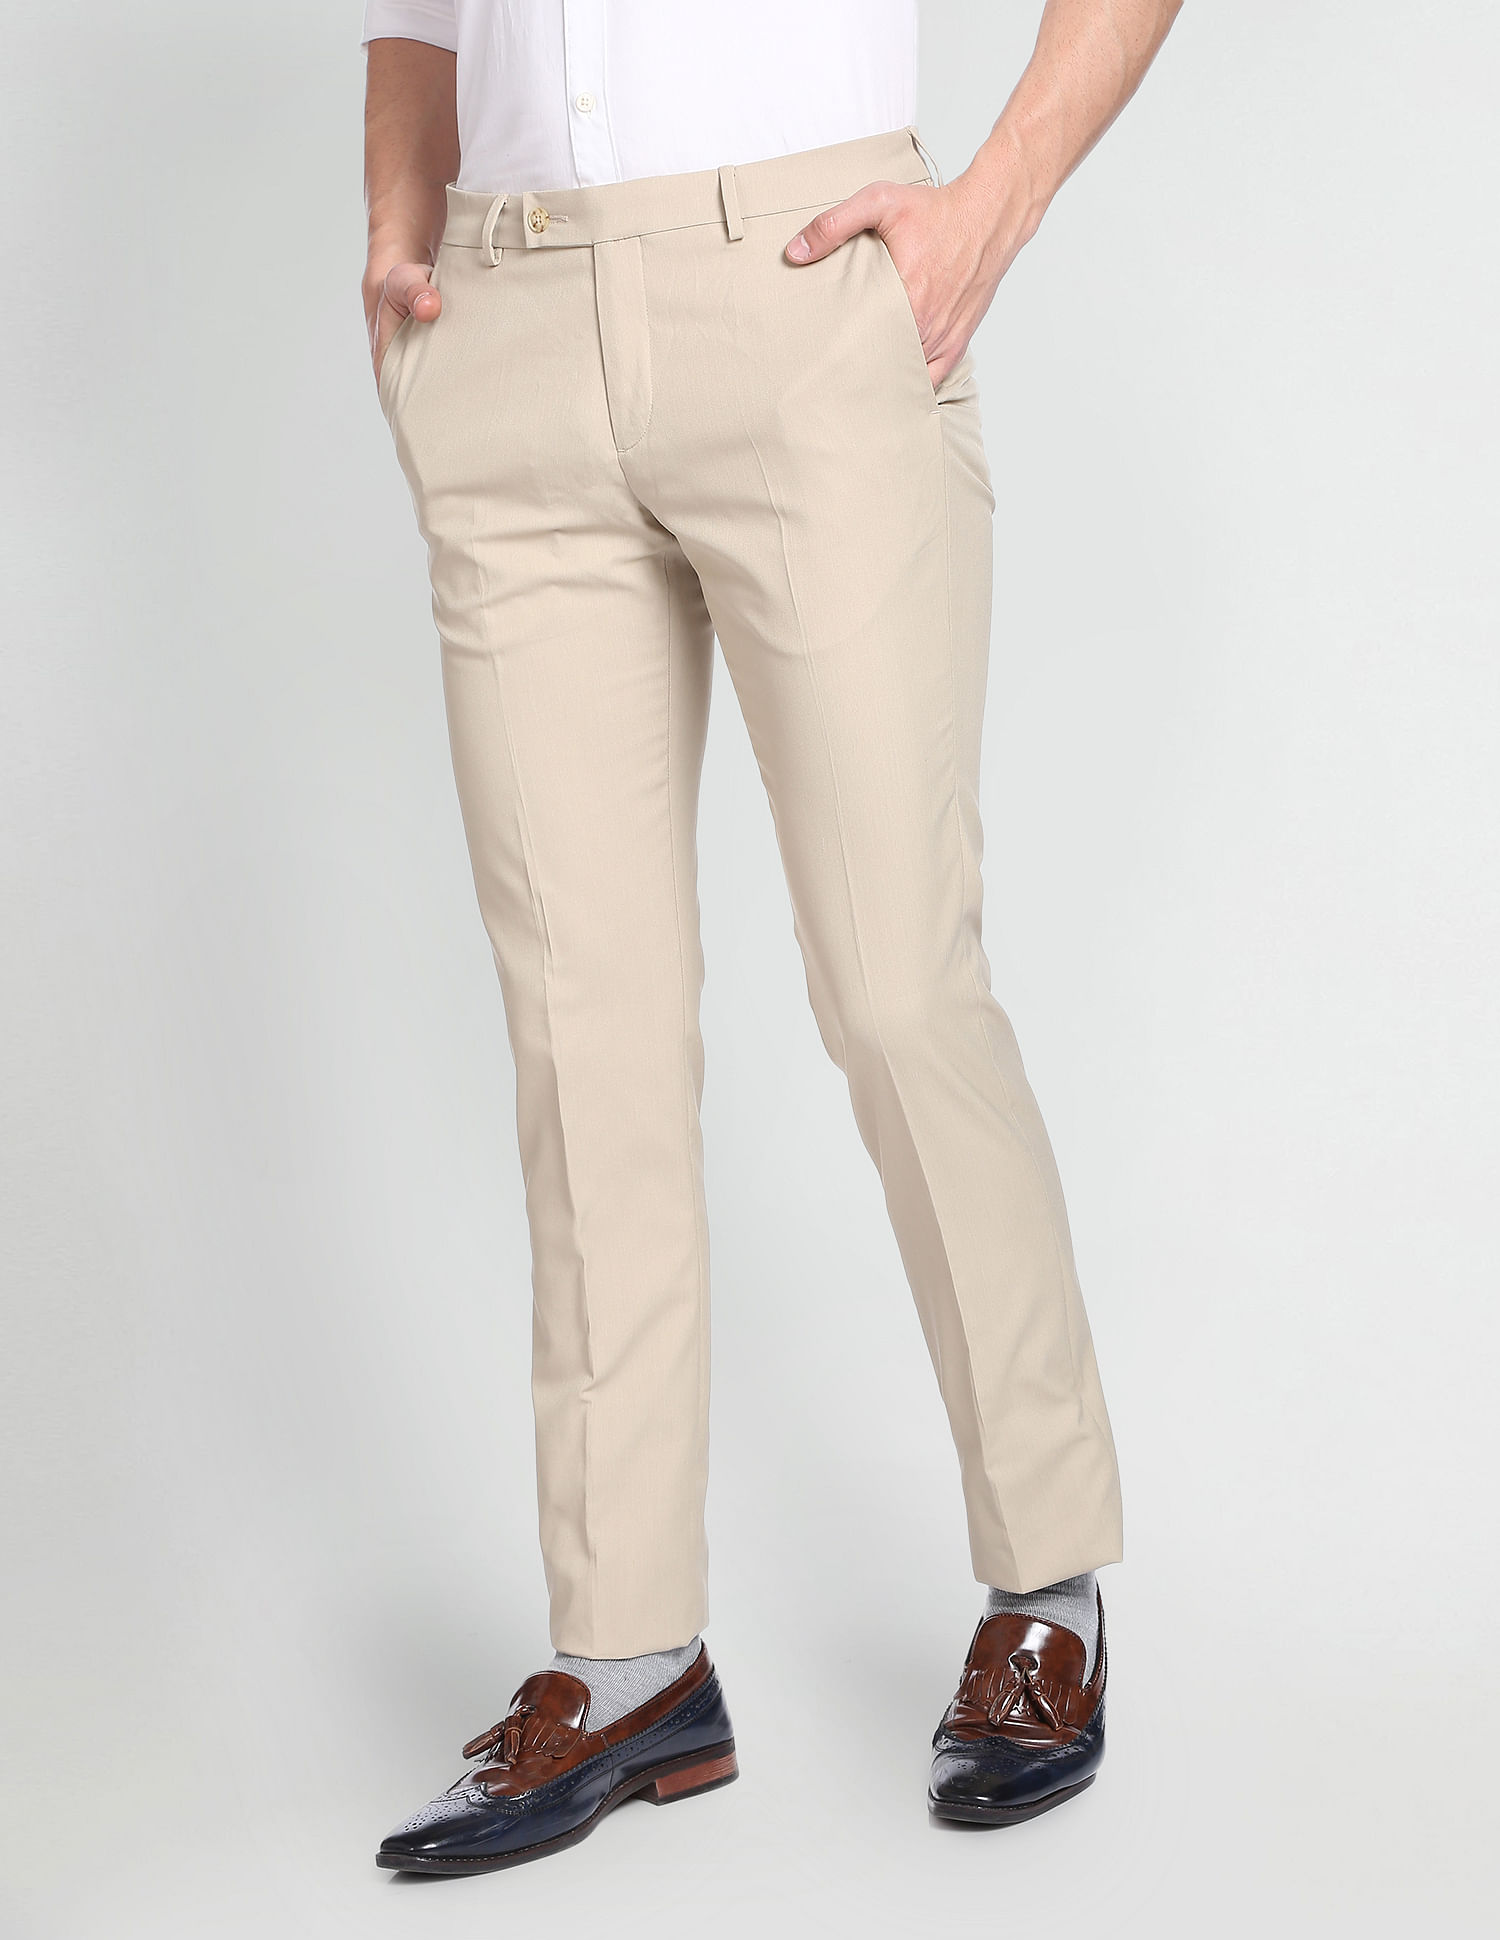 Buy Men Black Solid Slim Fit Formal Trousers Online - 735604 | Peter England